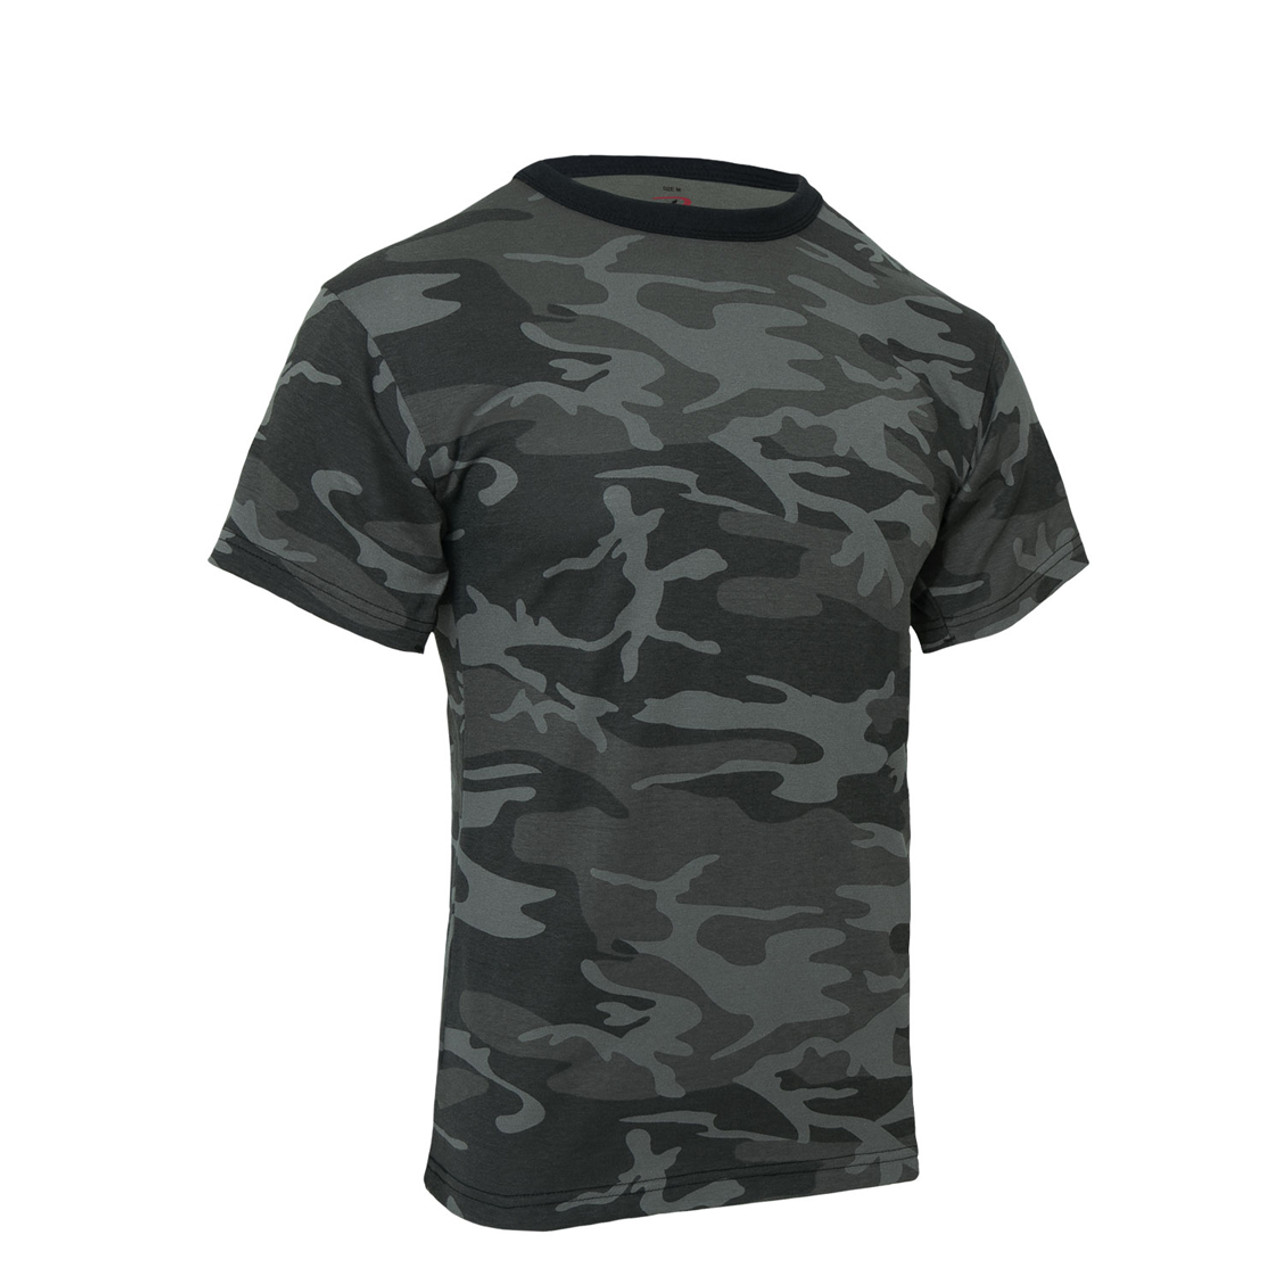 Shop Black T Shirts Army - Gear Fatigues Camo Navy